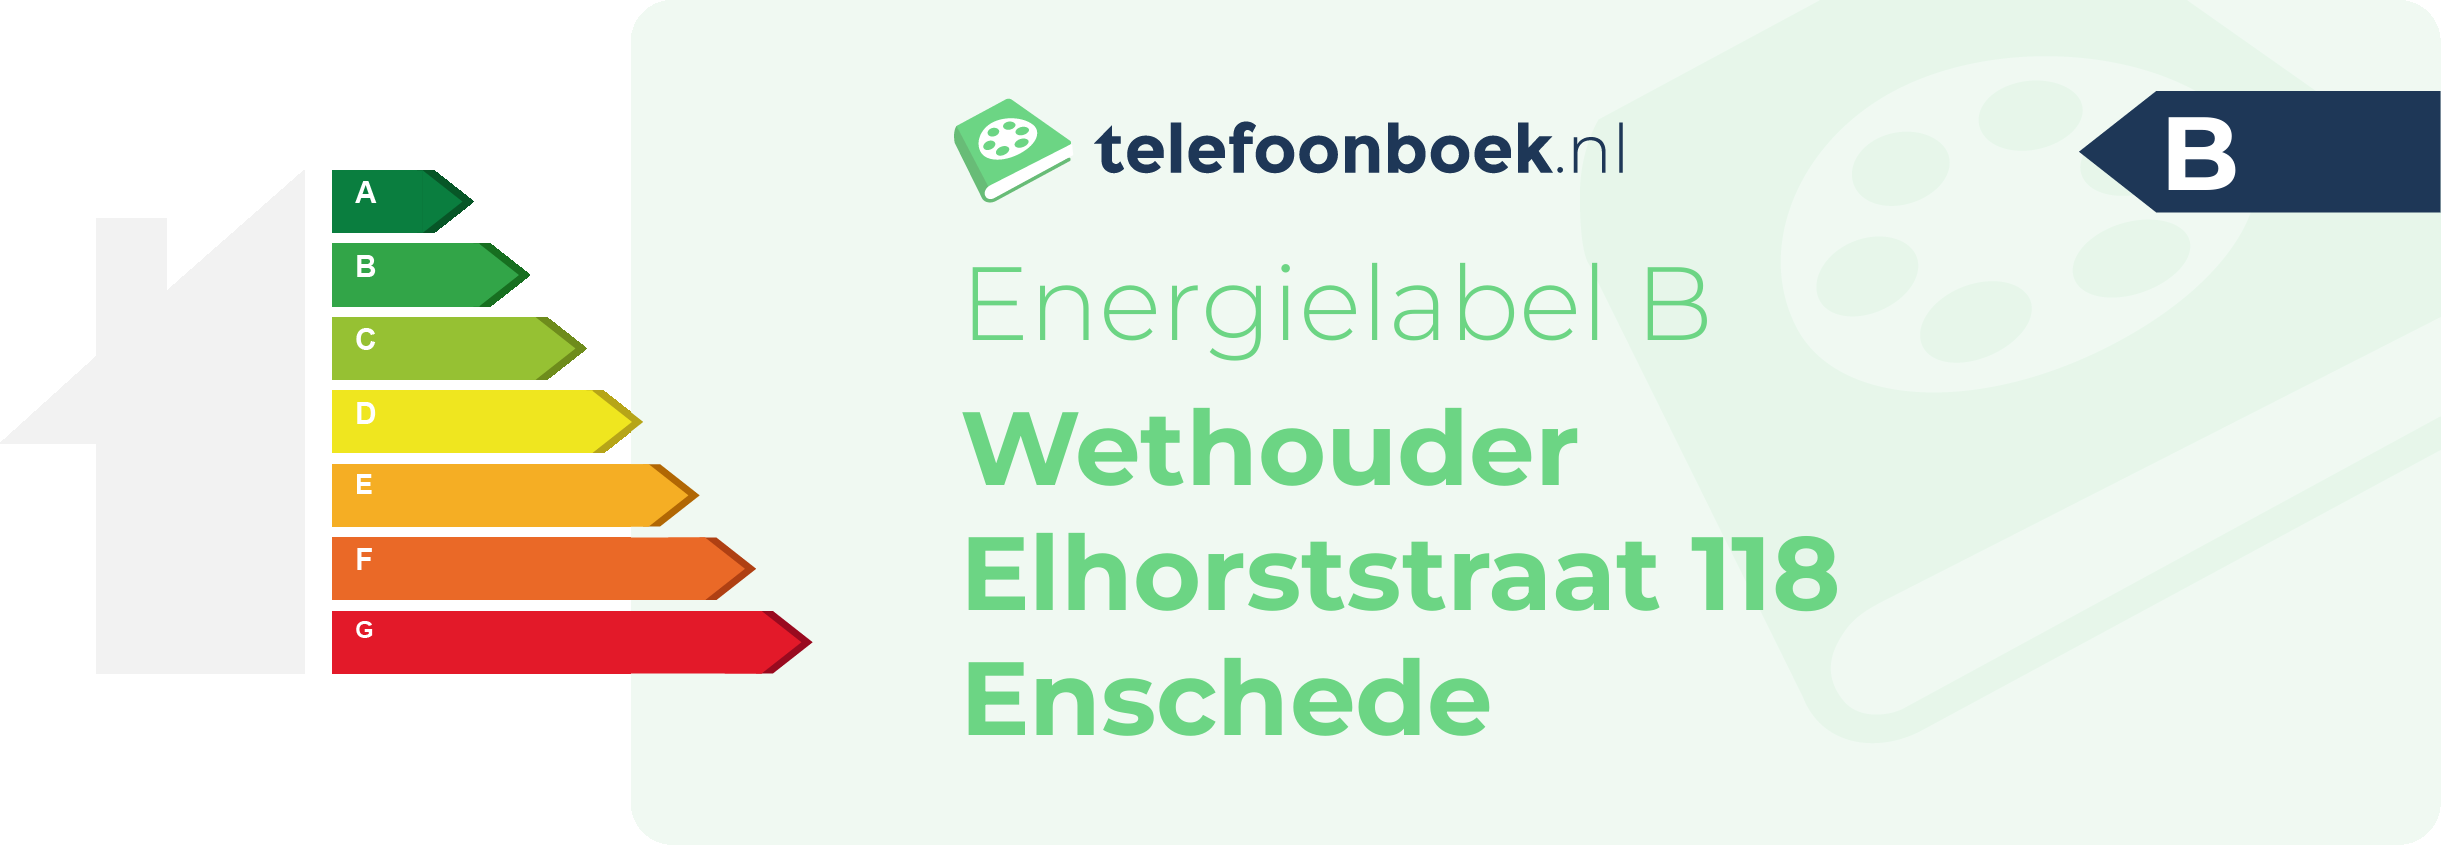 Energielabel Wethouder Elhorststraat 118 Enschede